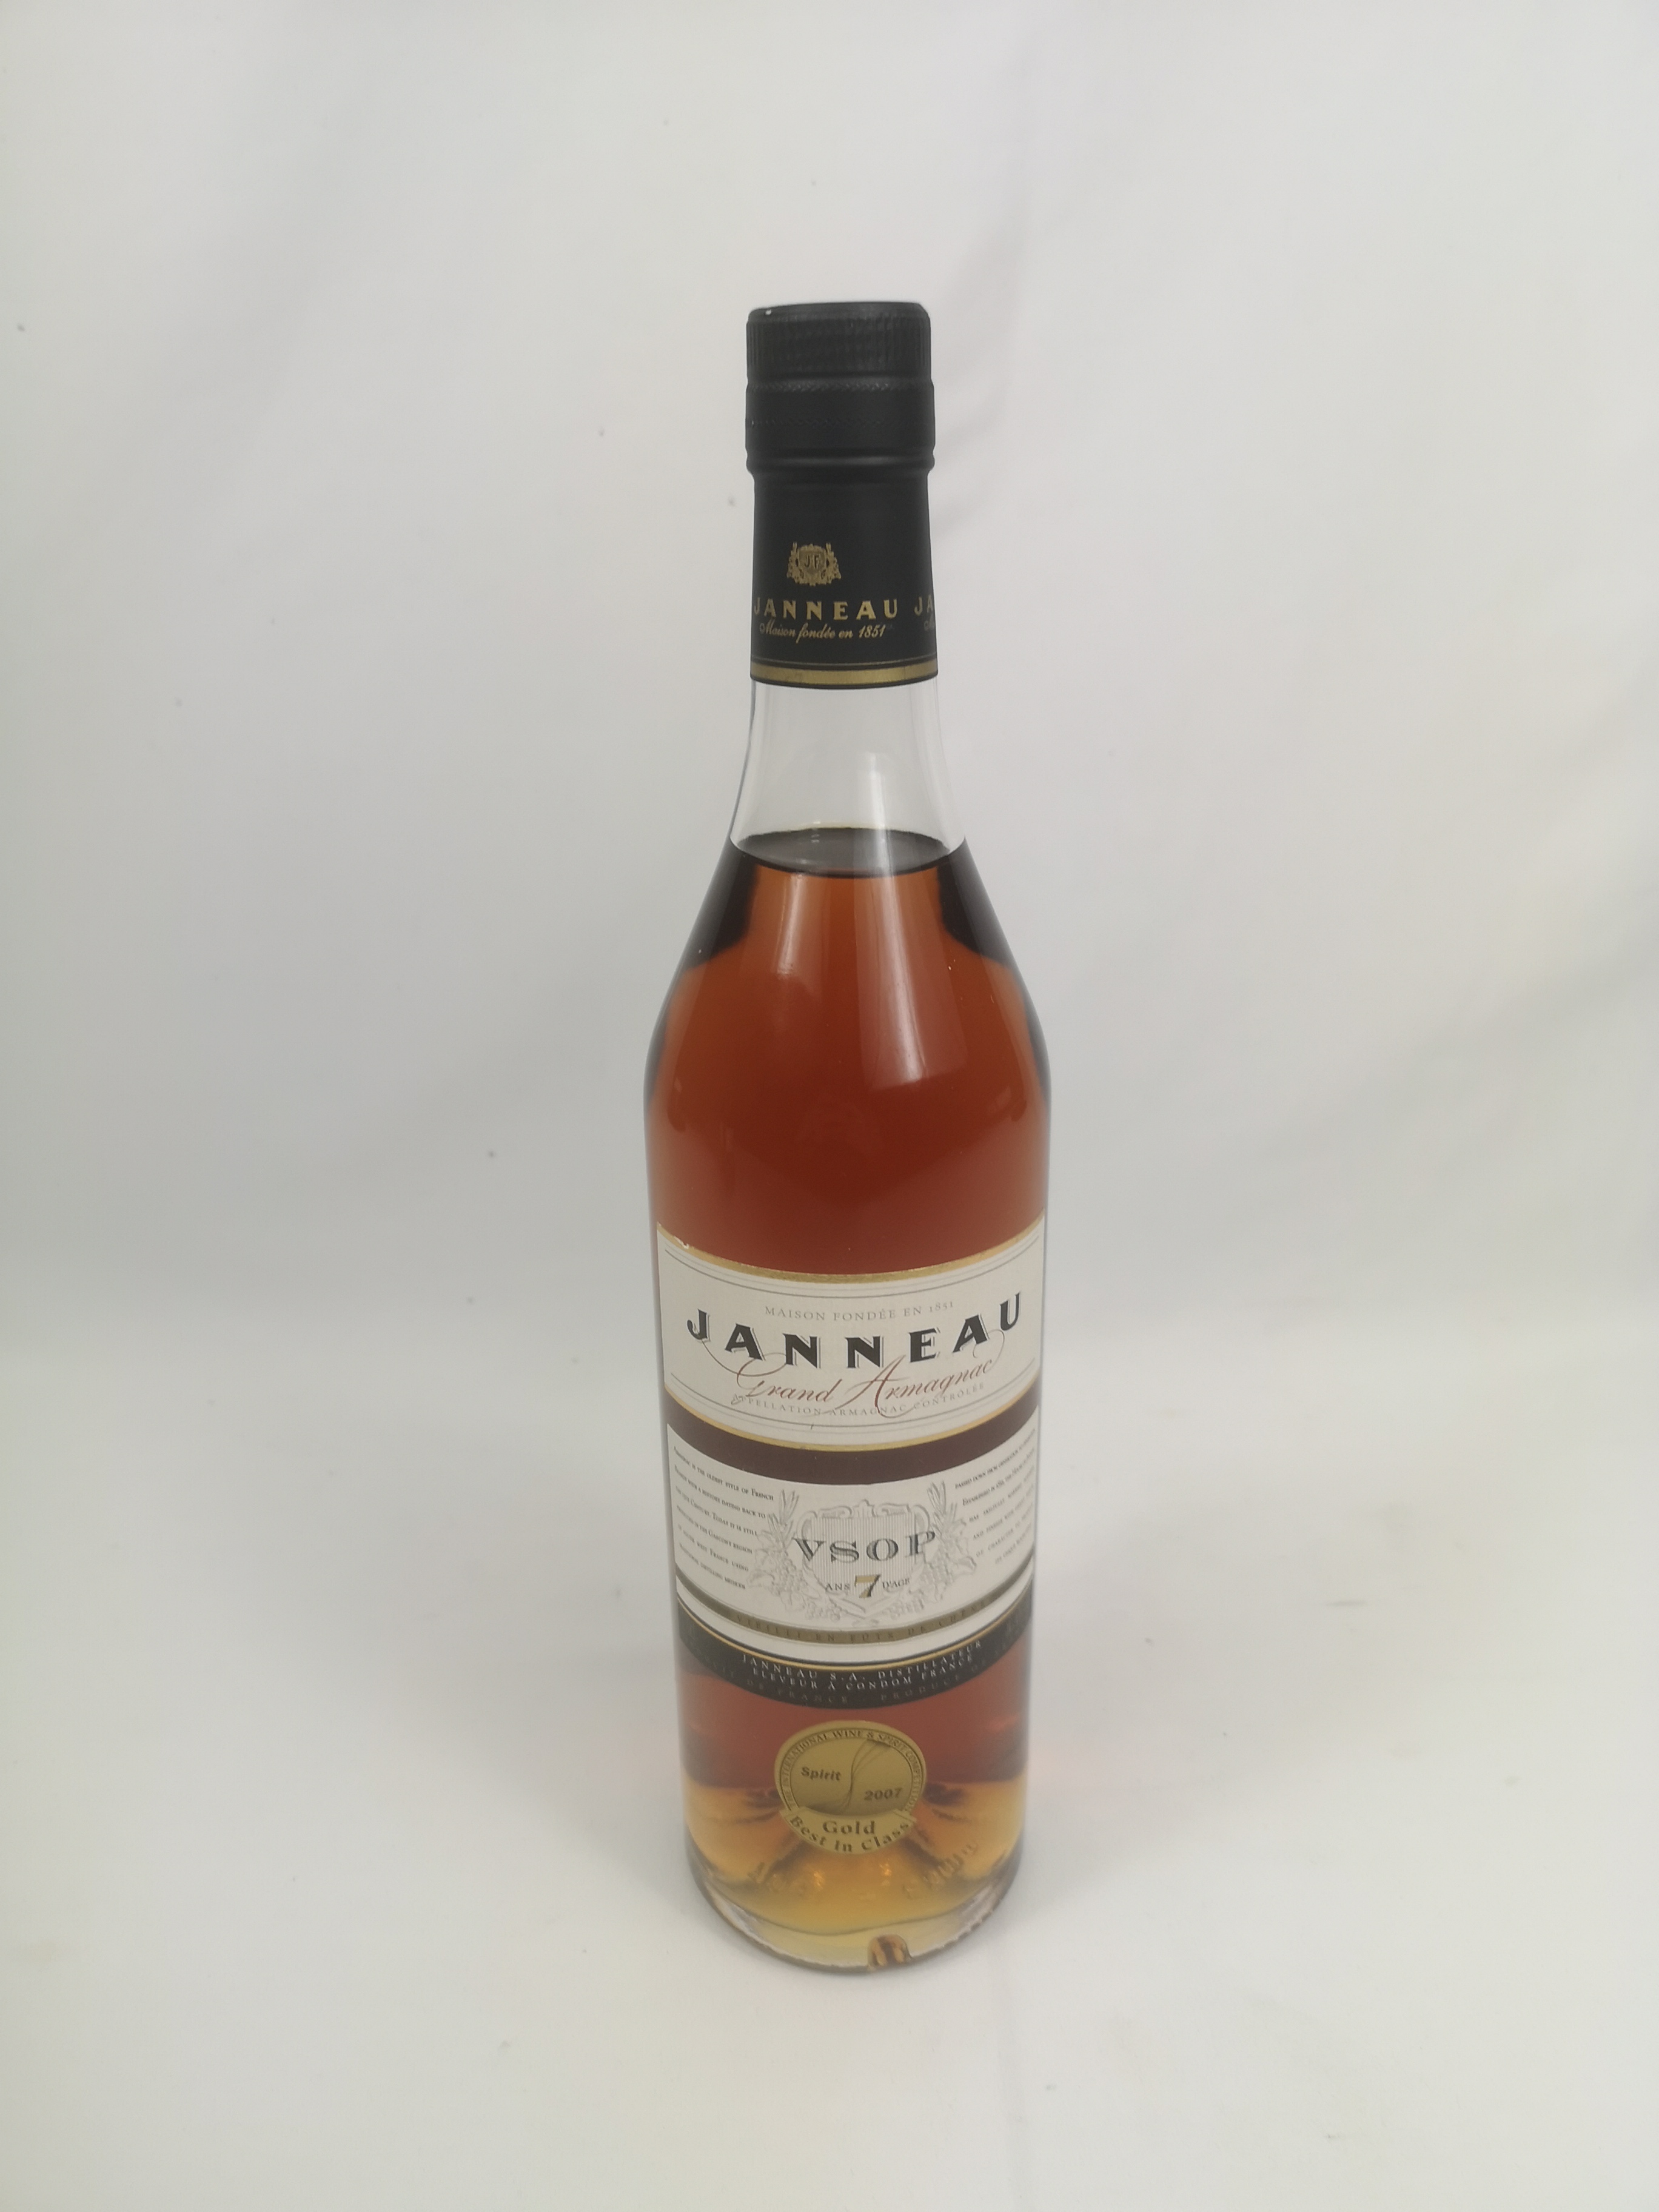 Two bottles of Janneau Grand Armagnac - Image 4 of 5